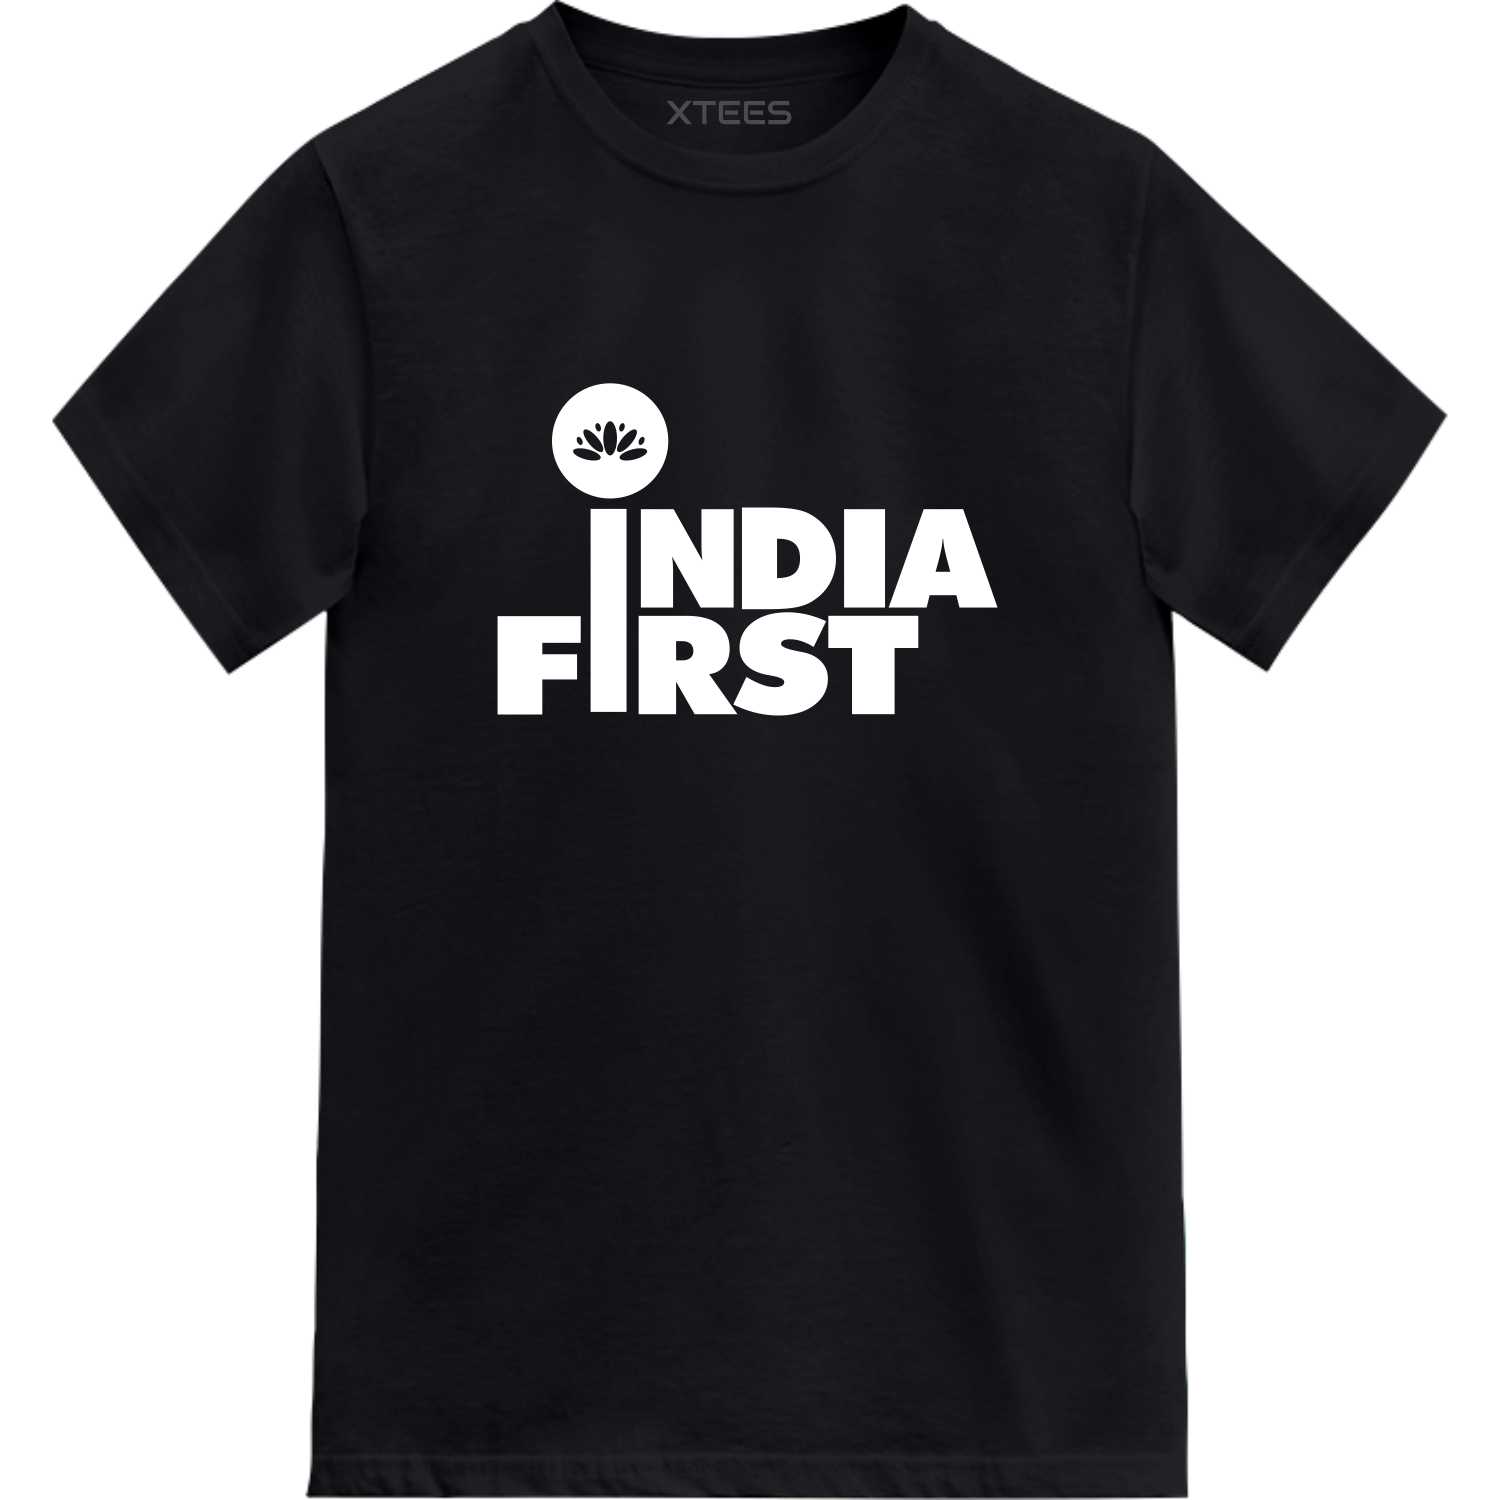 India First Slogan T-shirts image